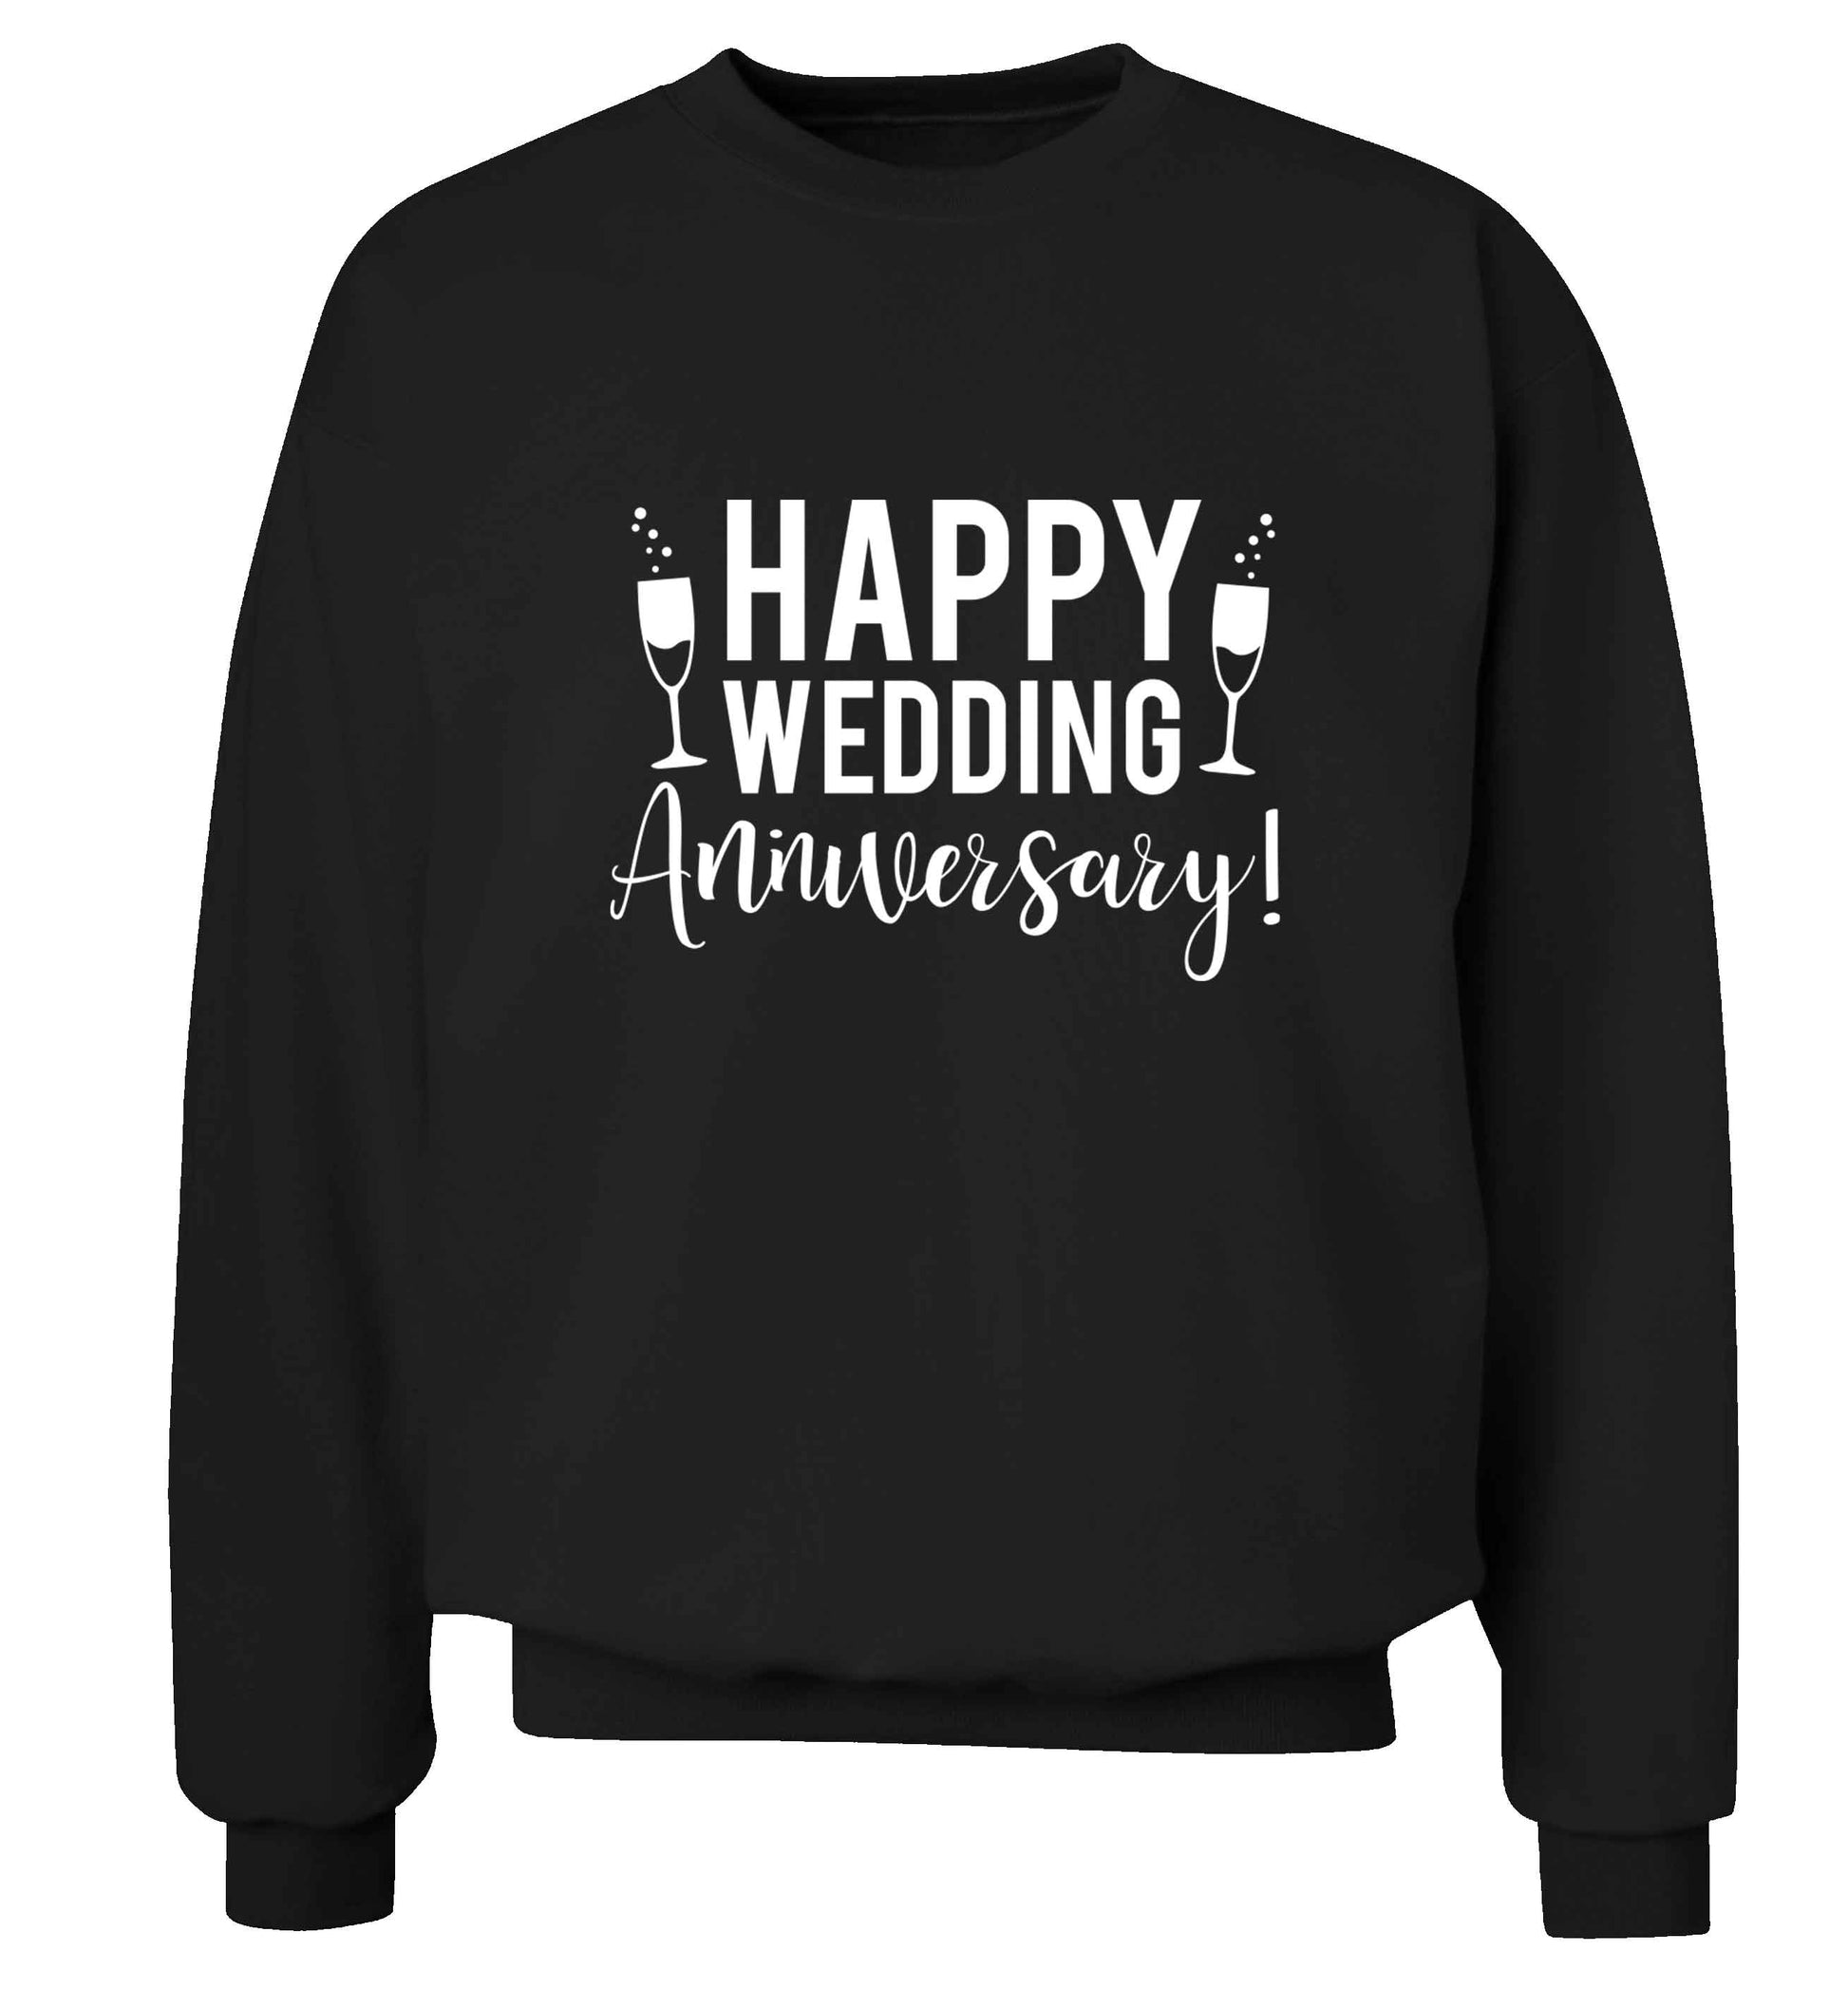 Happy wedding anniversary! adult's unisex black sweater 2XL